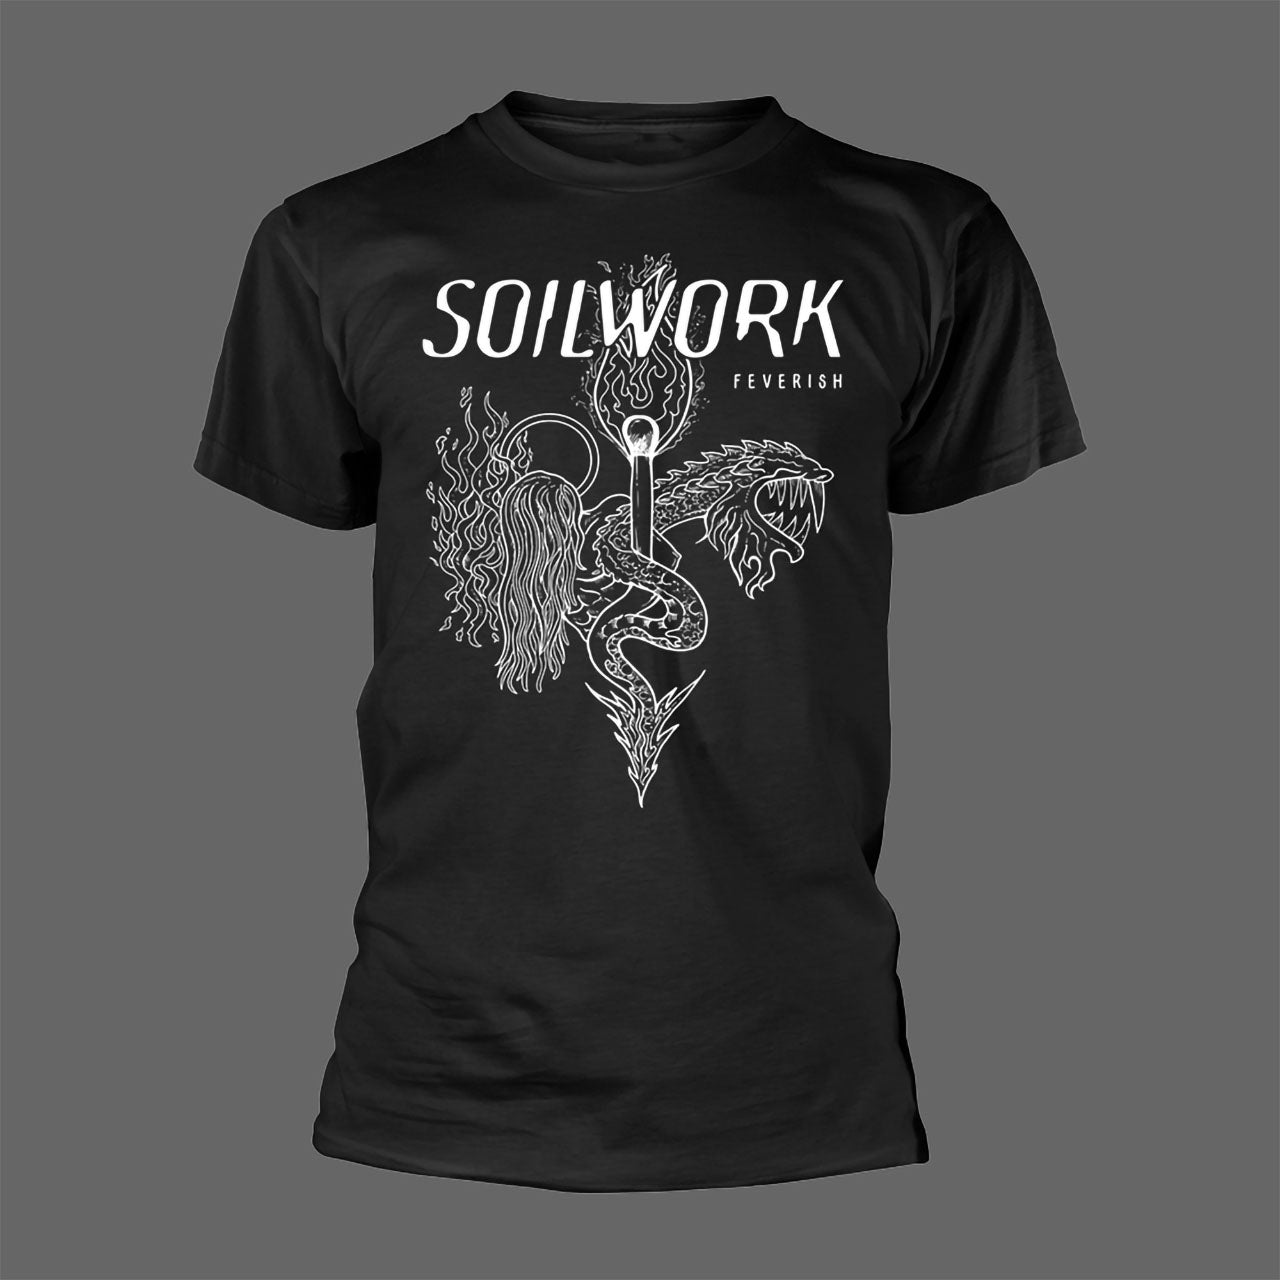 Soilwork - Feverish (T-Shirt)